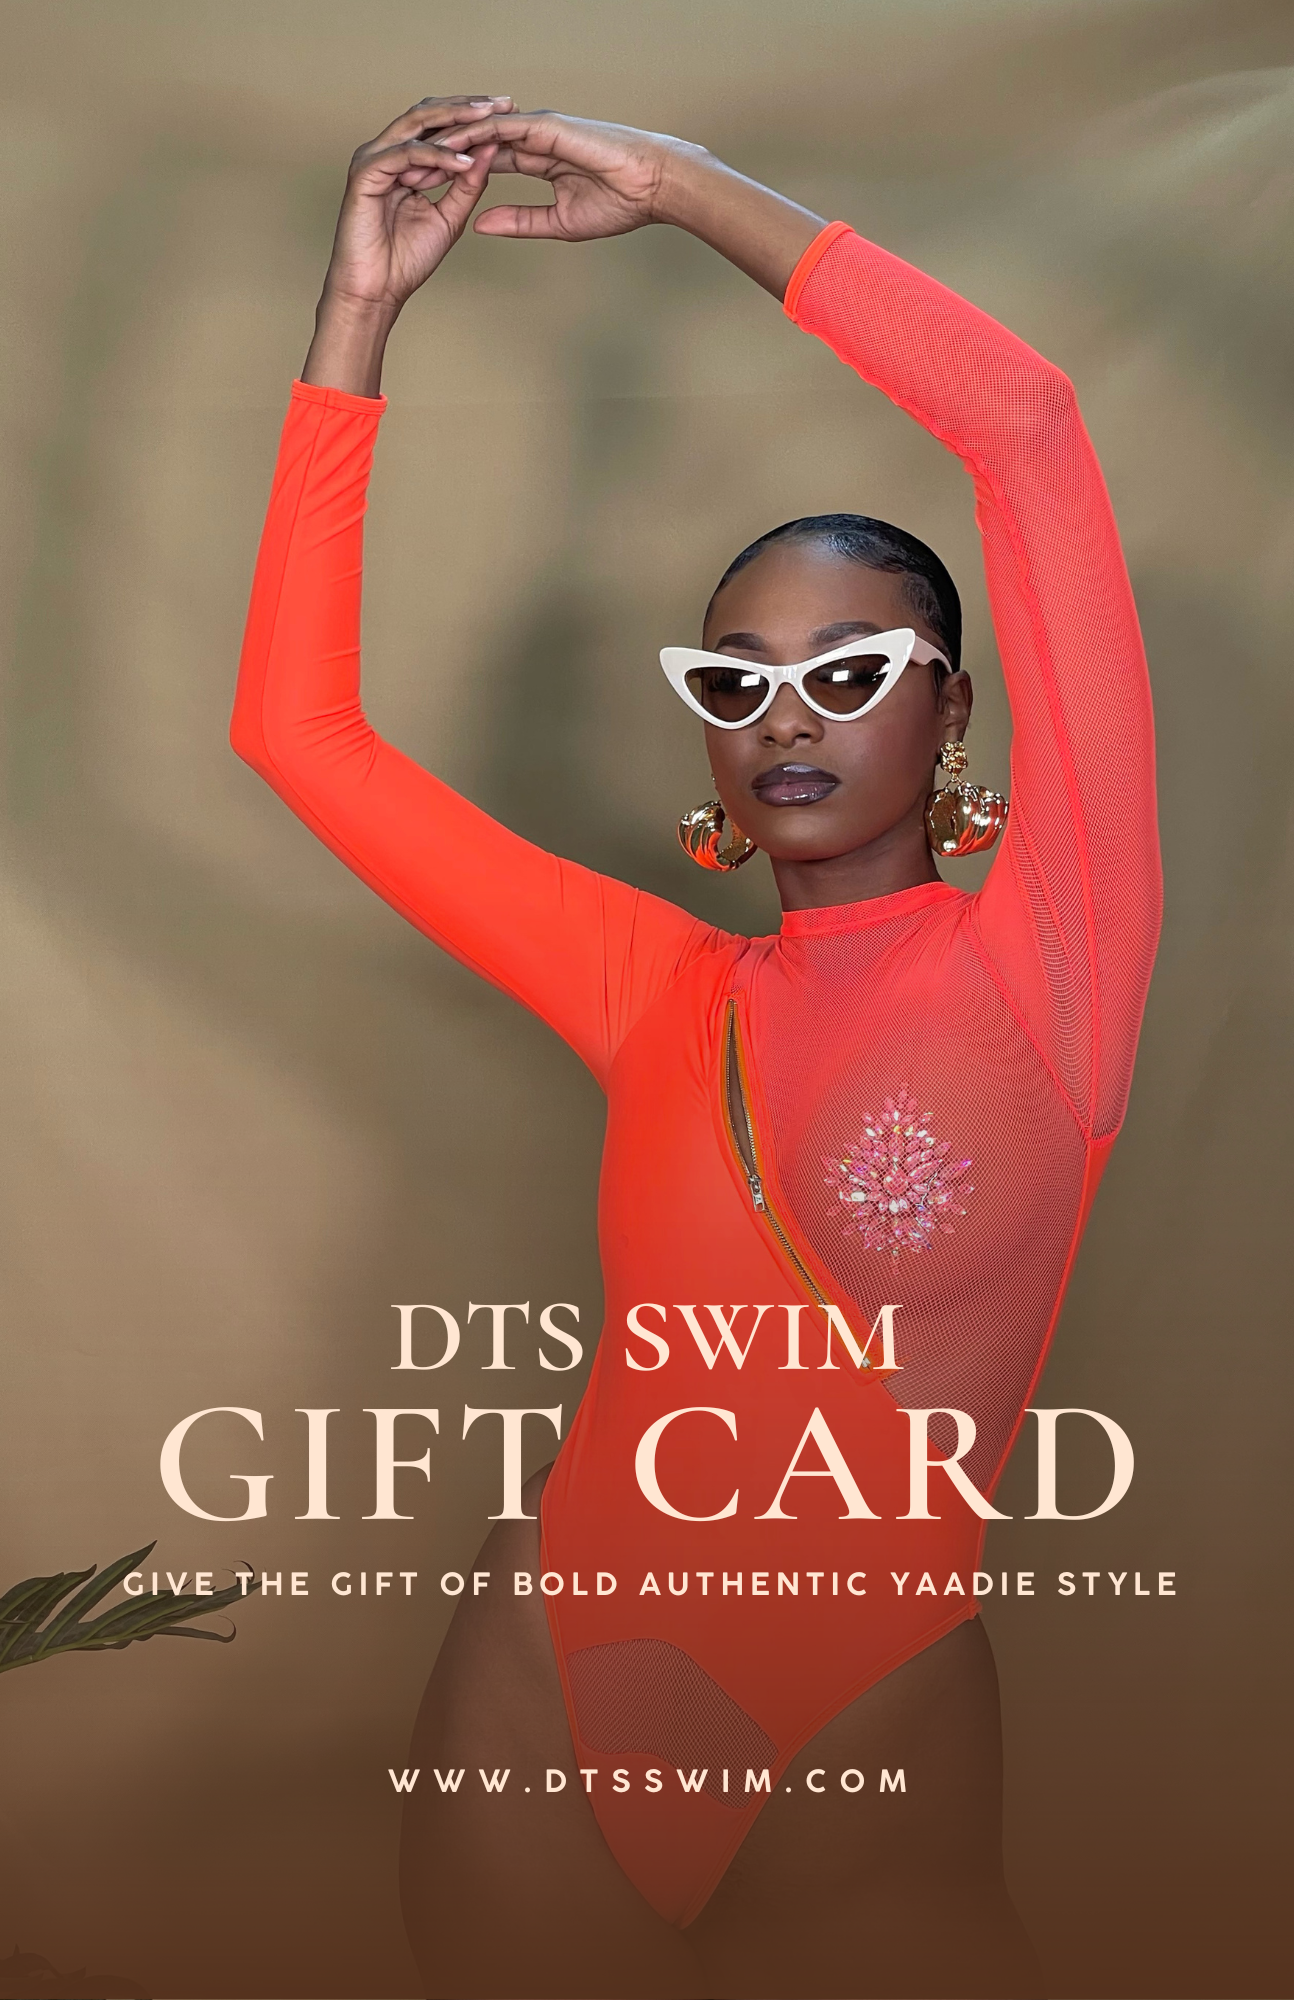 DTS SWIM GIFT CARD – DTS Swim